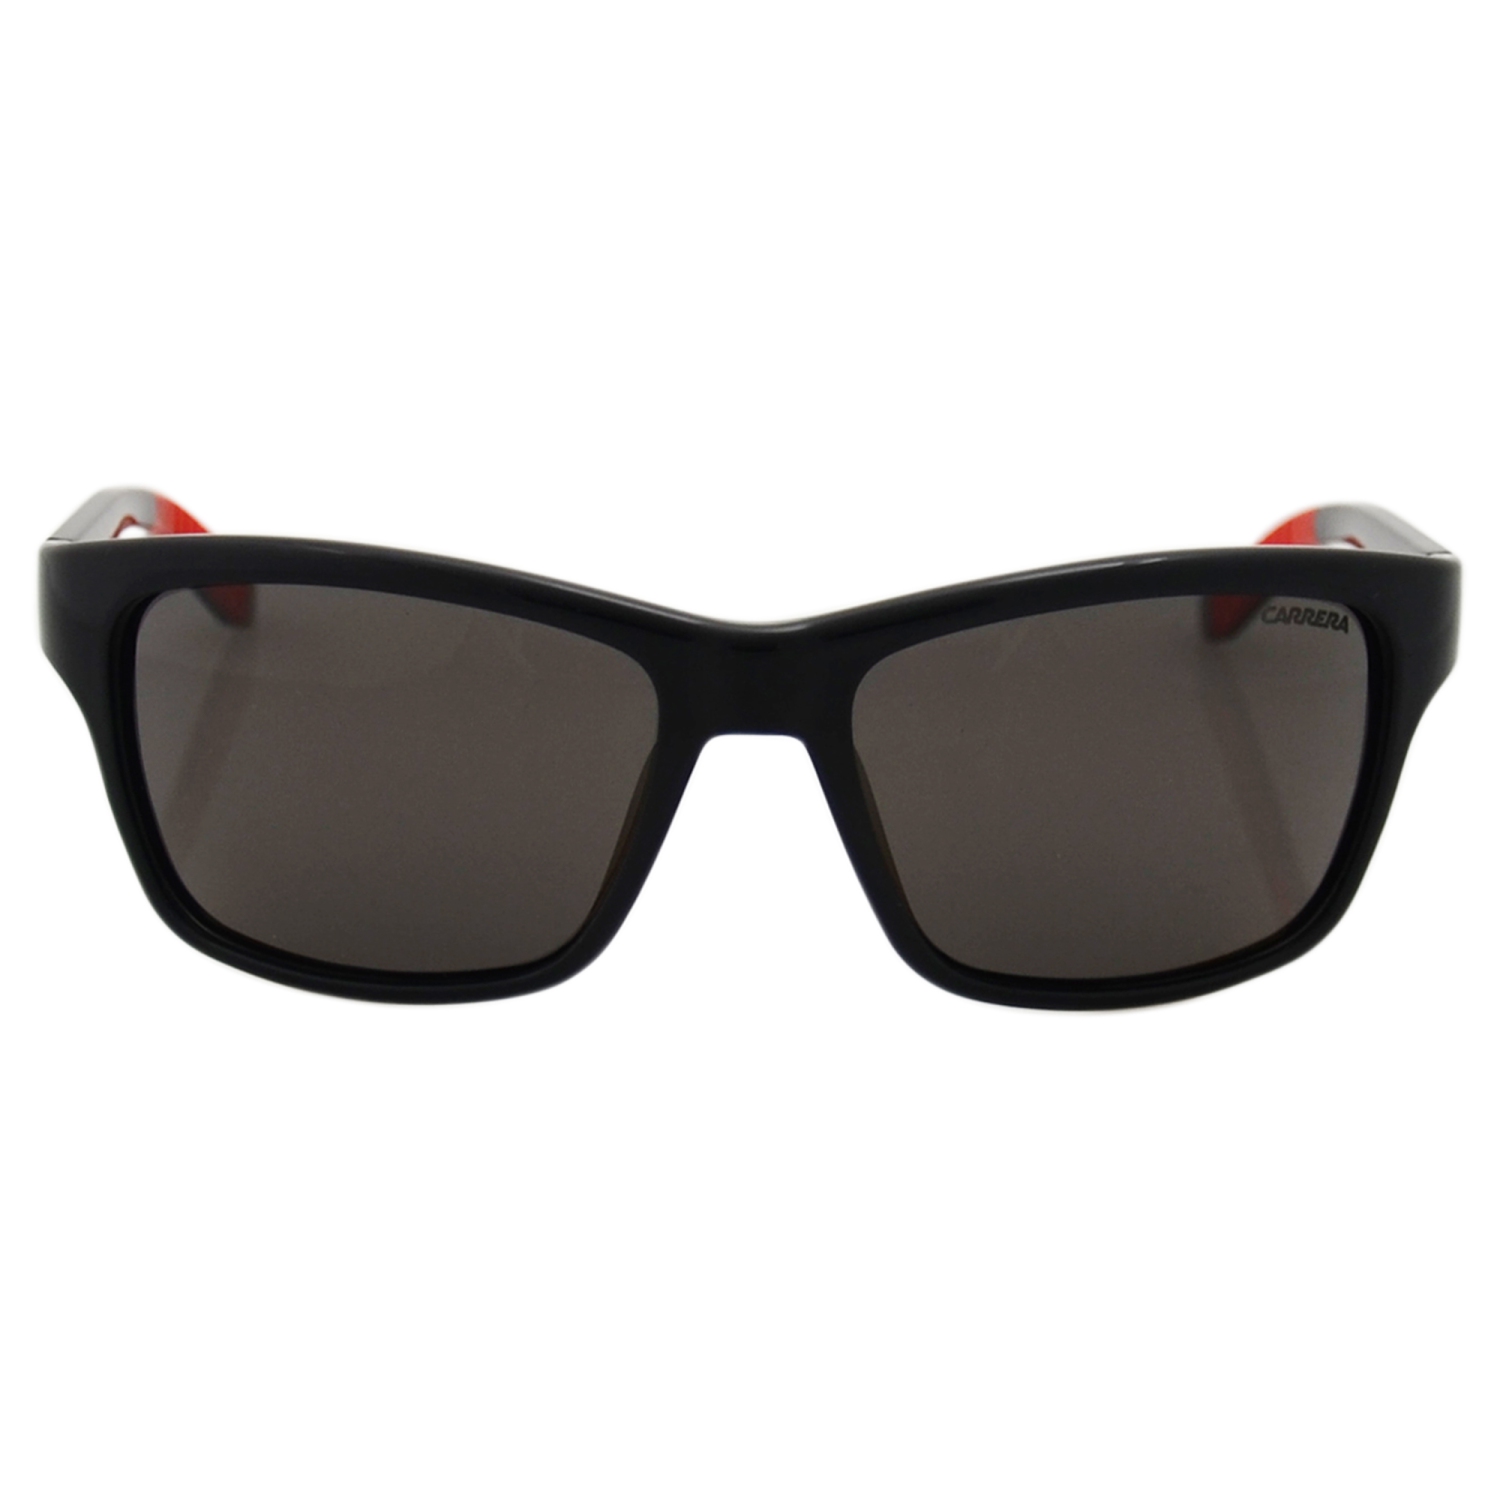 Carrera 8013/S D28M9 - Shiny Black by Carrera for Men - 58-17-125 mm Sunglasses